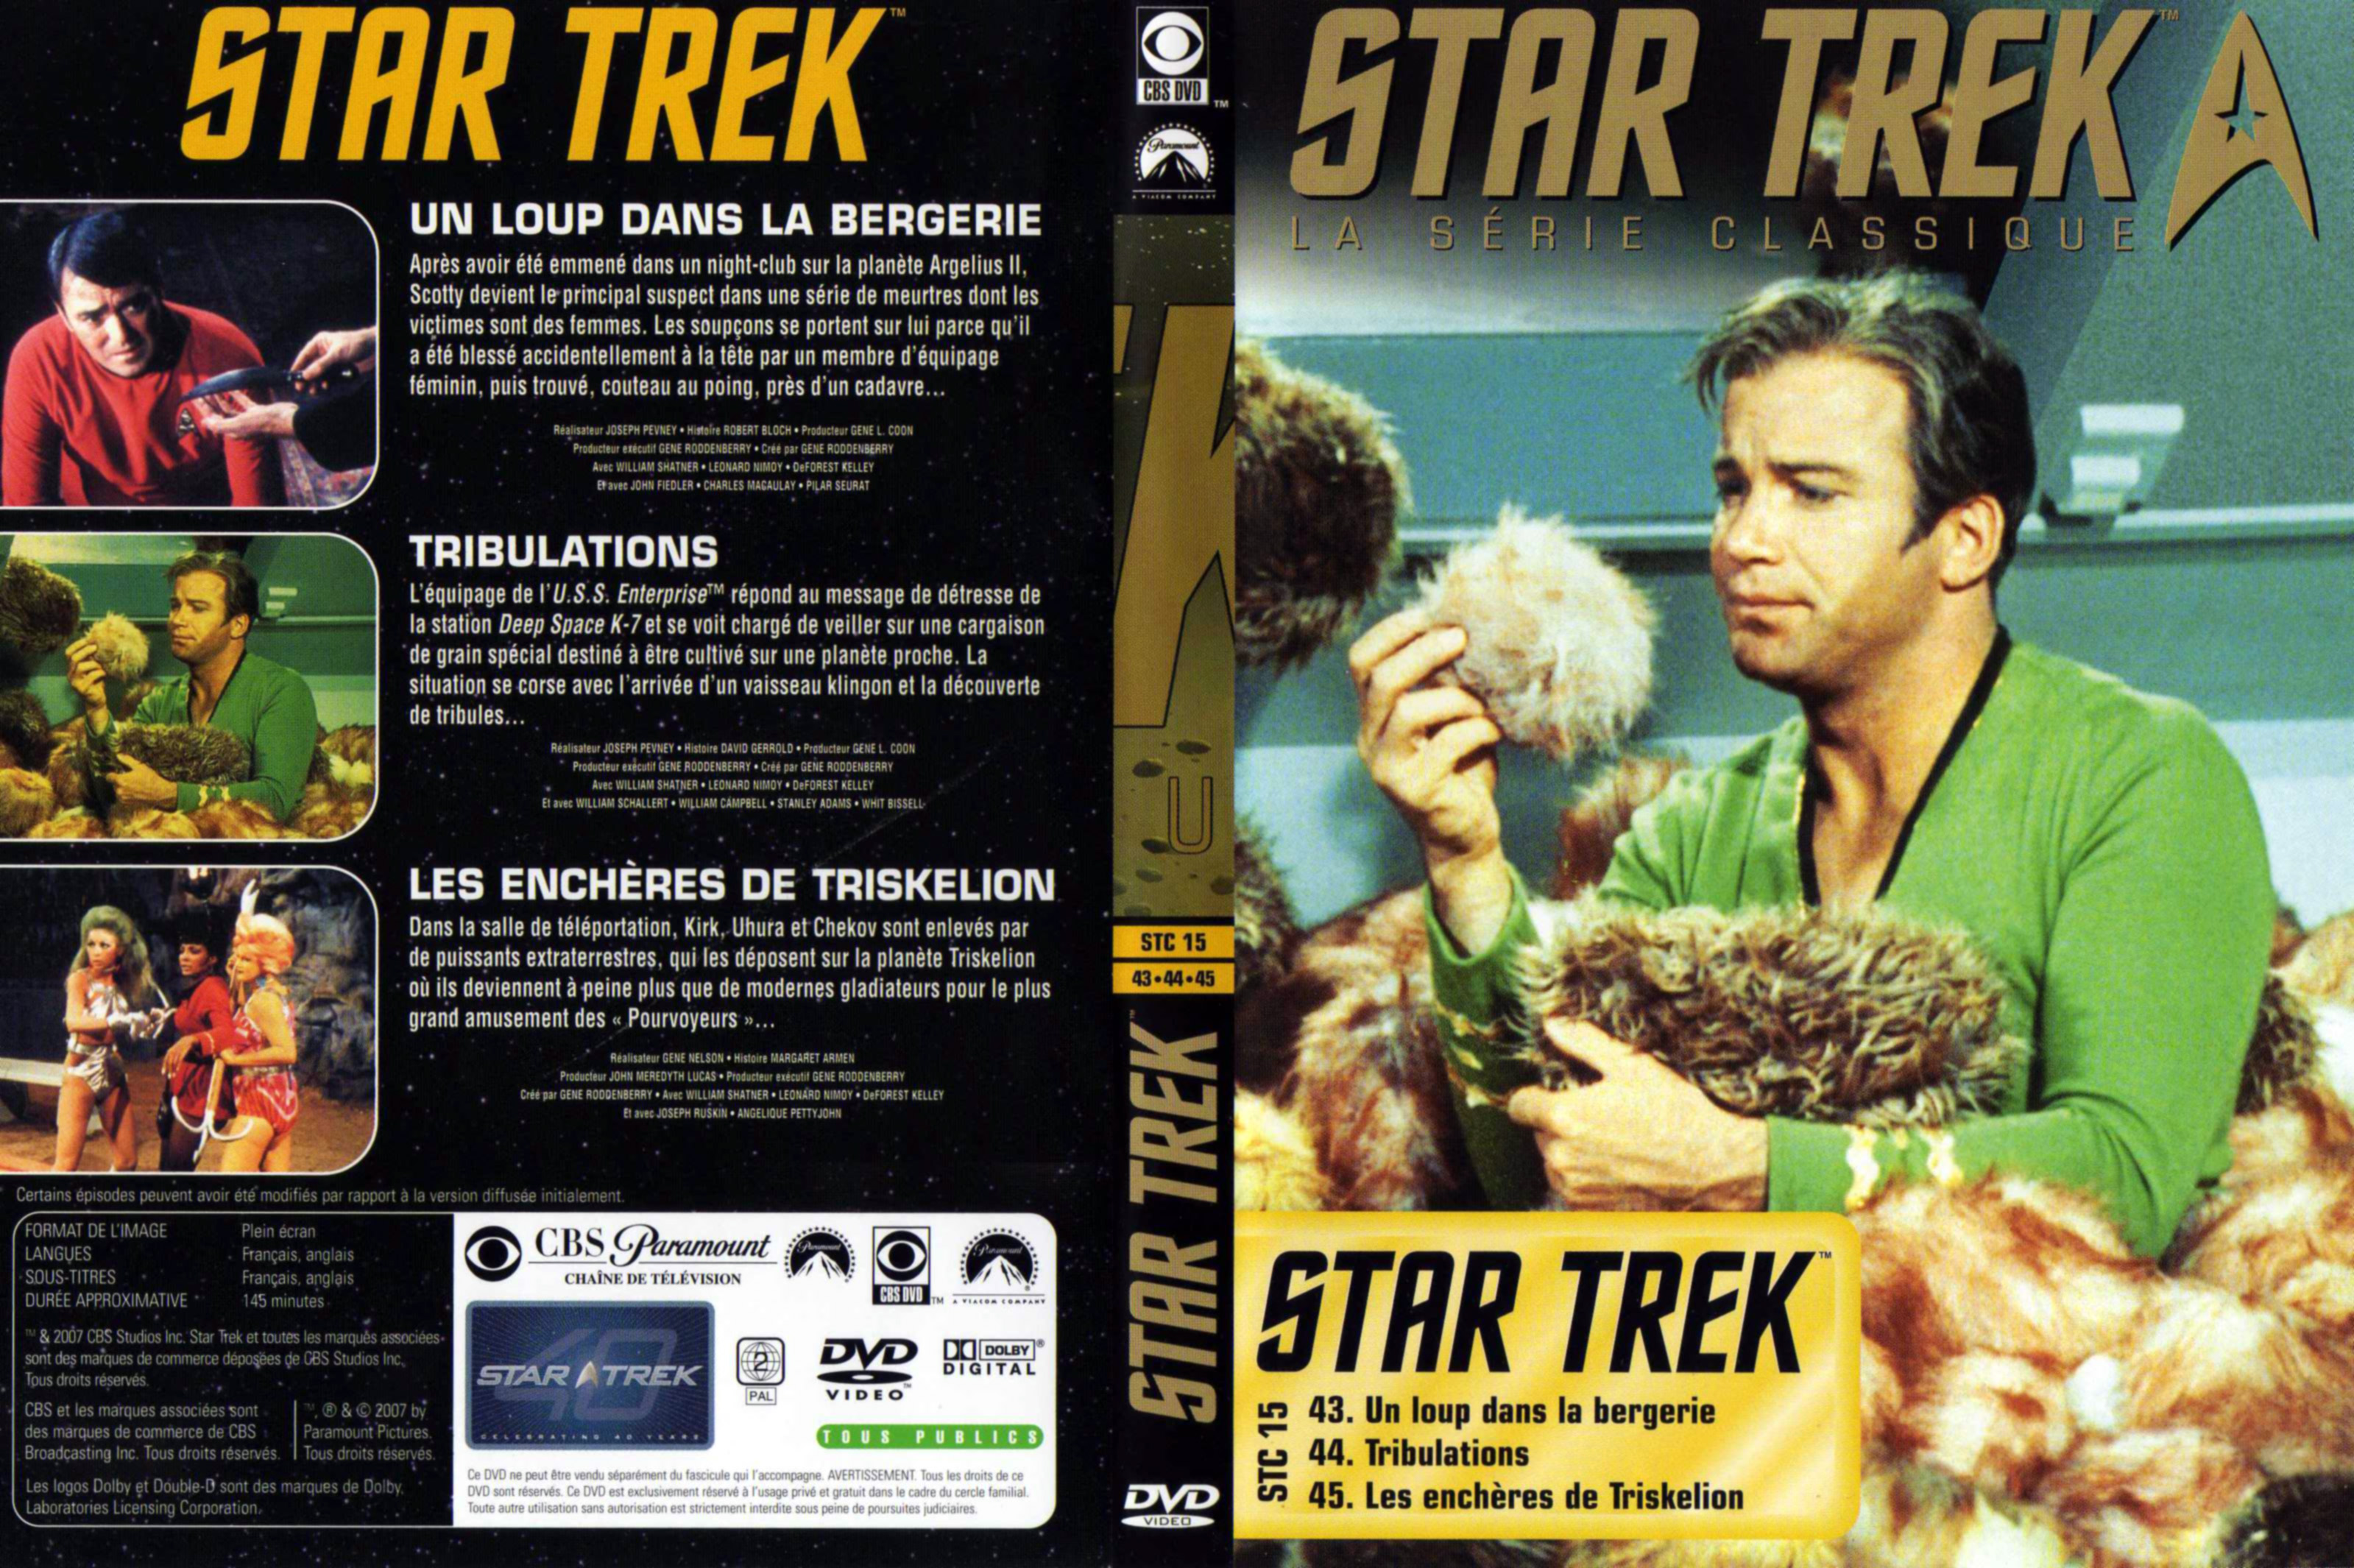 Jaquette DVD Star Trek vol 15